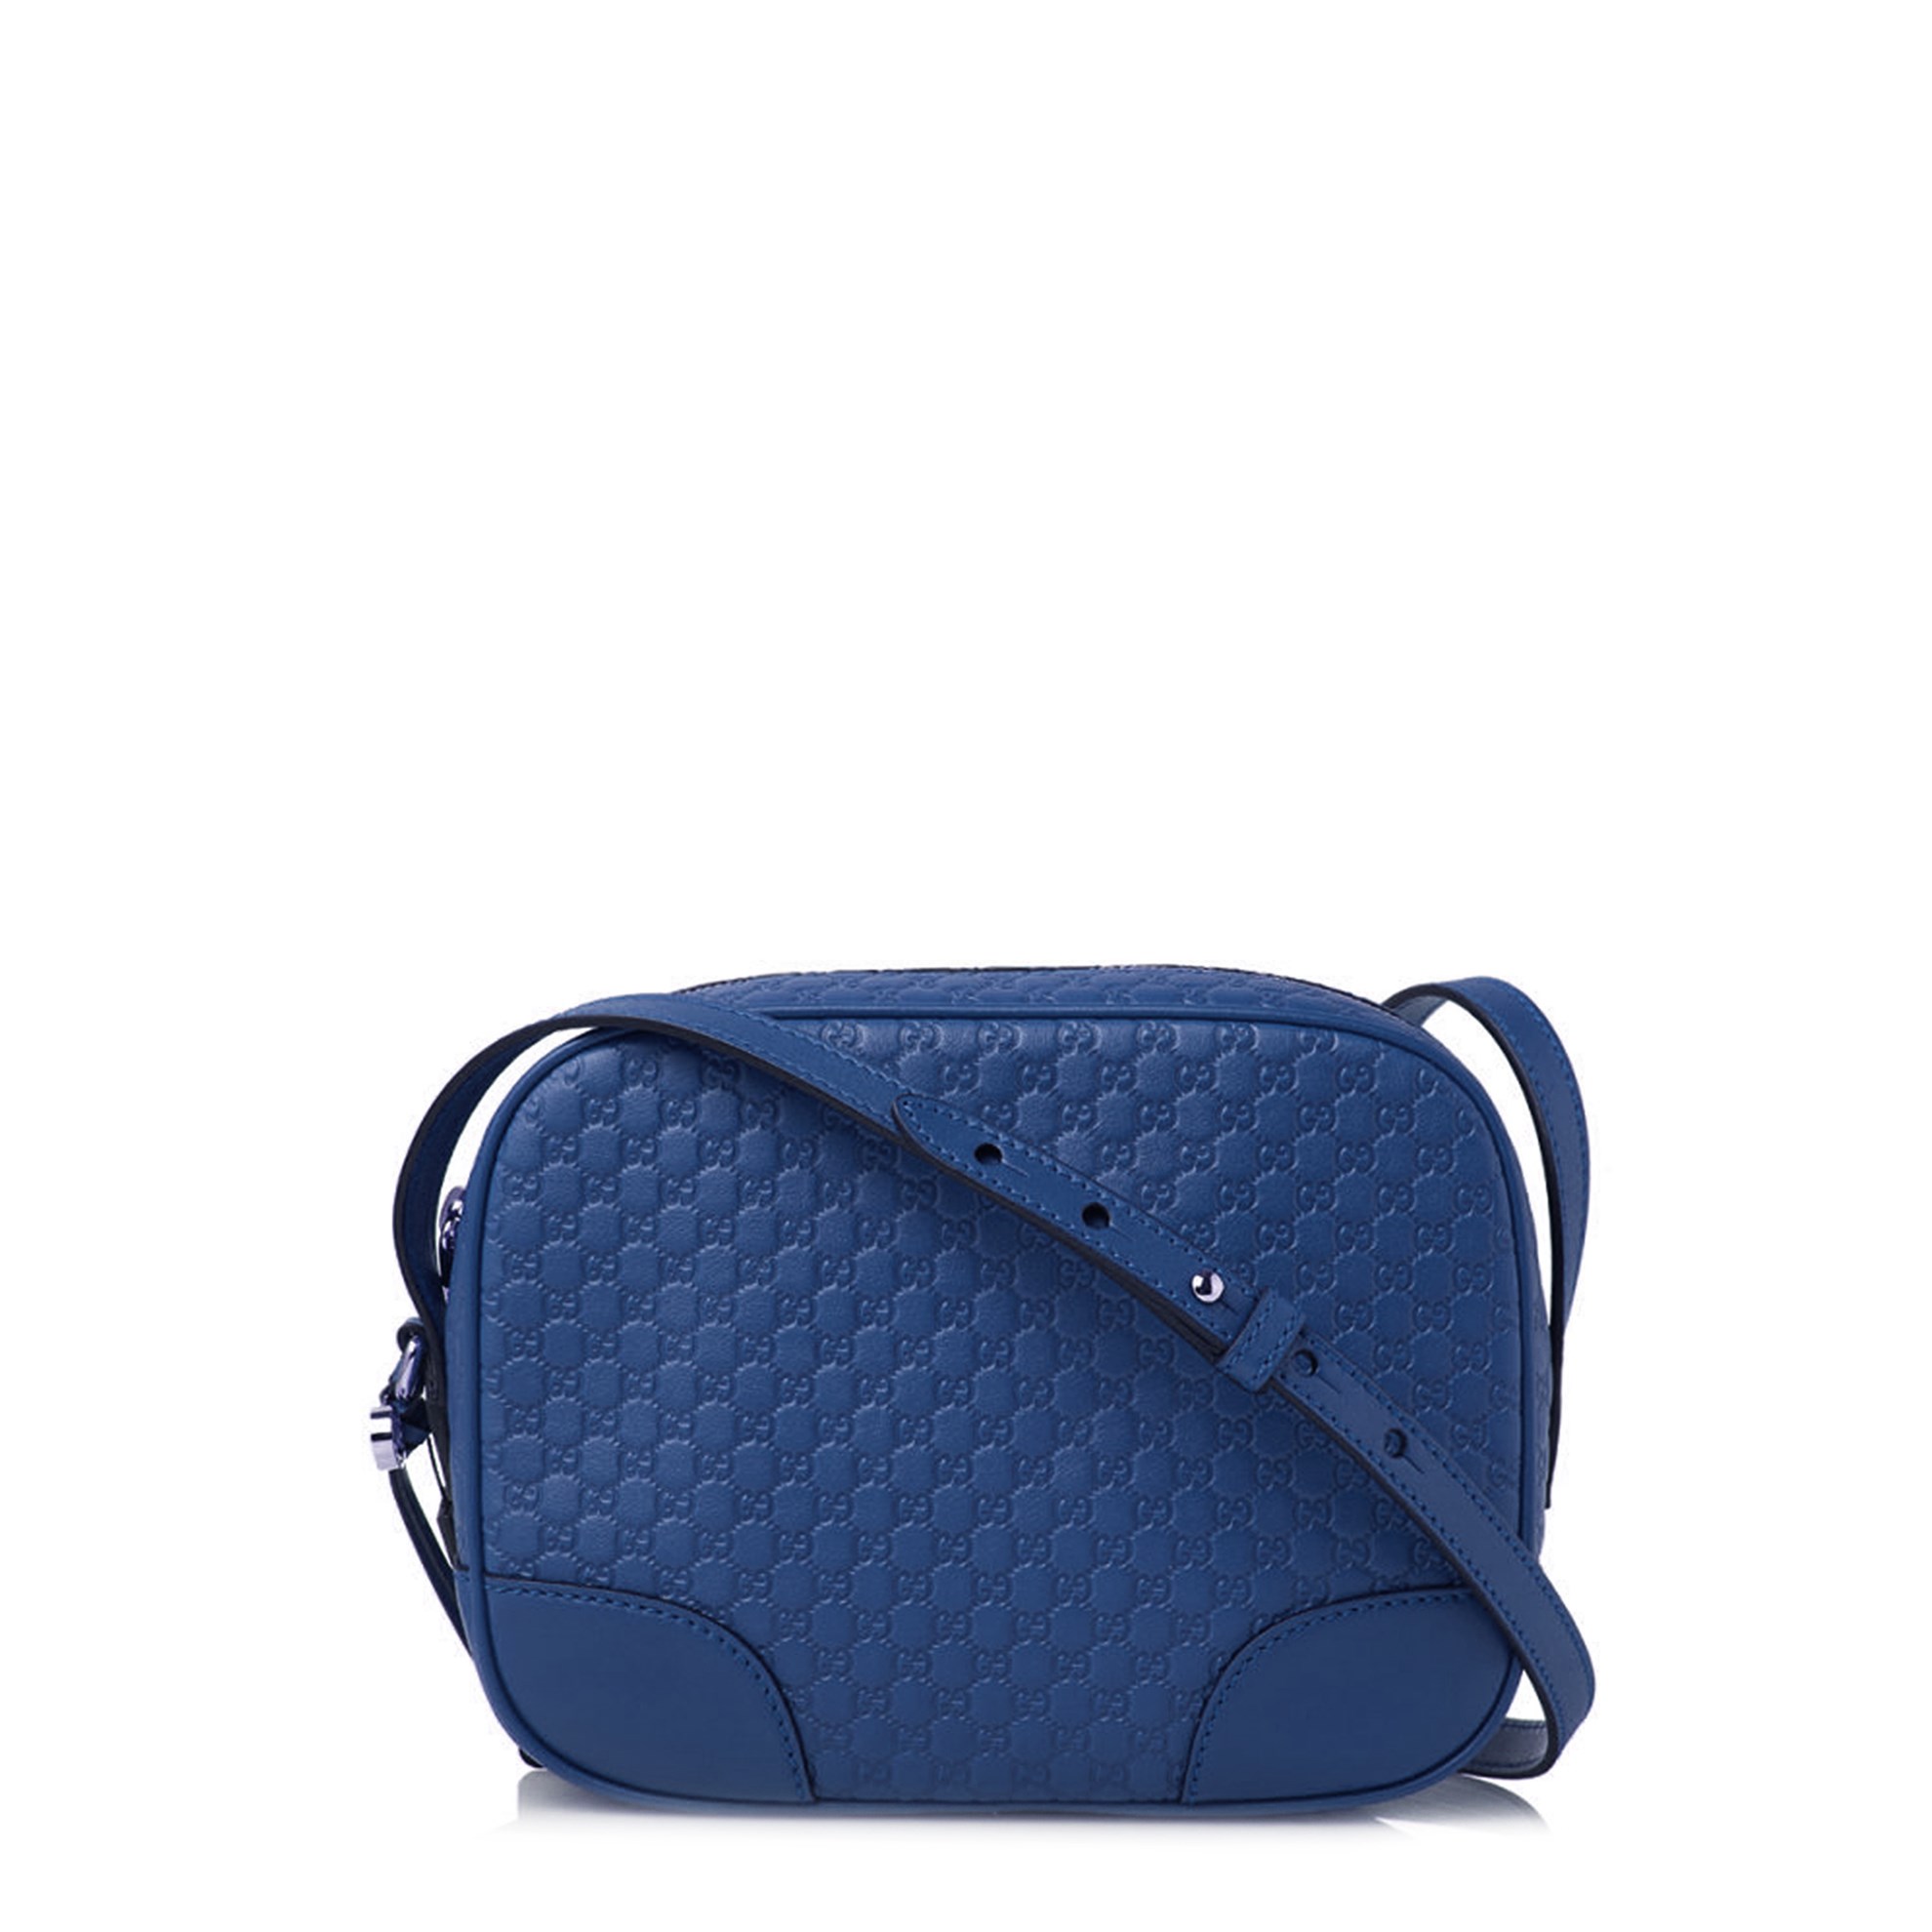 Gucci Women bag 449413 Bmj1g Blue